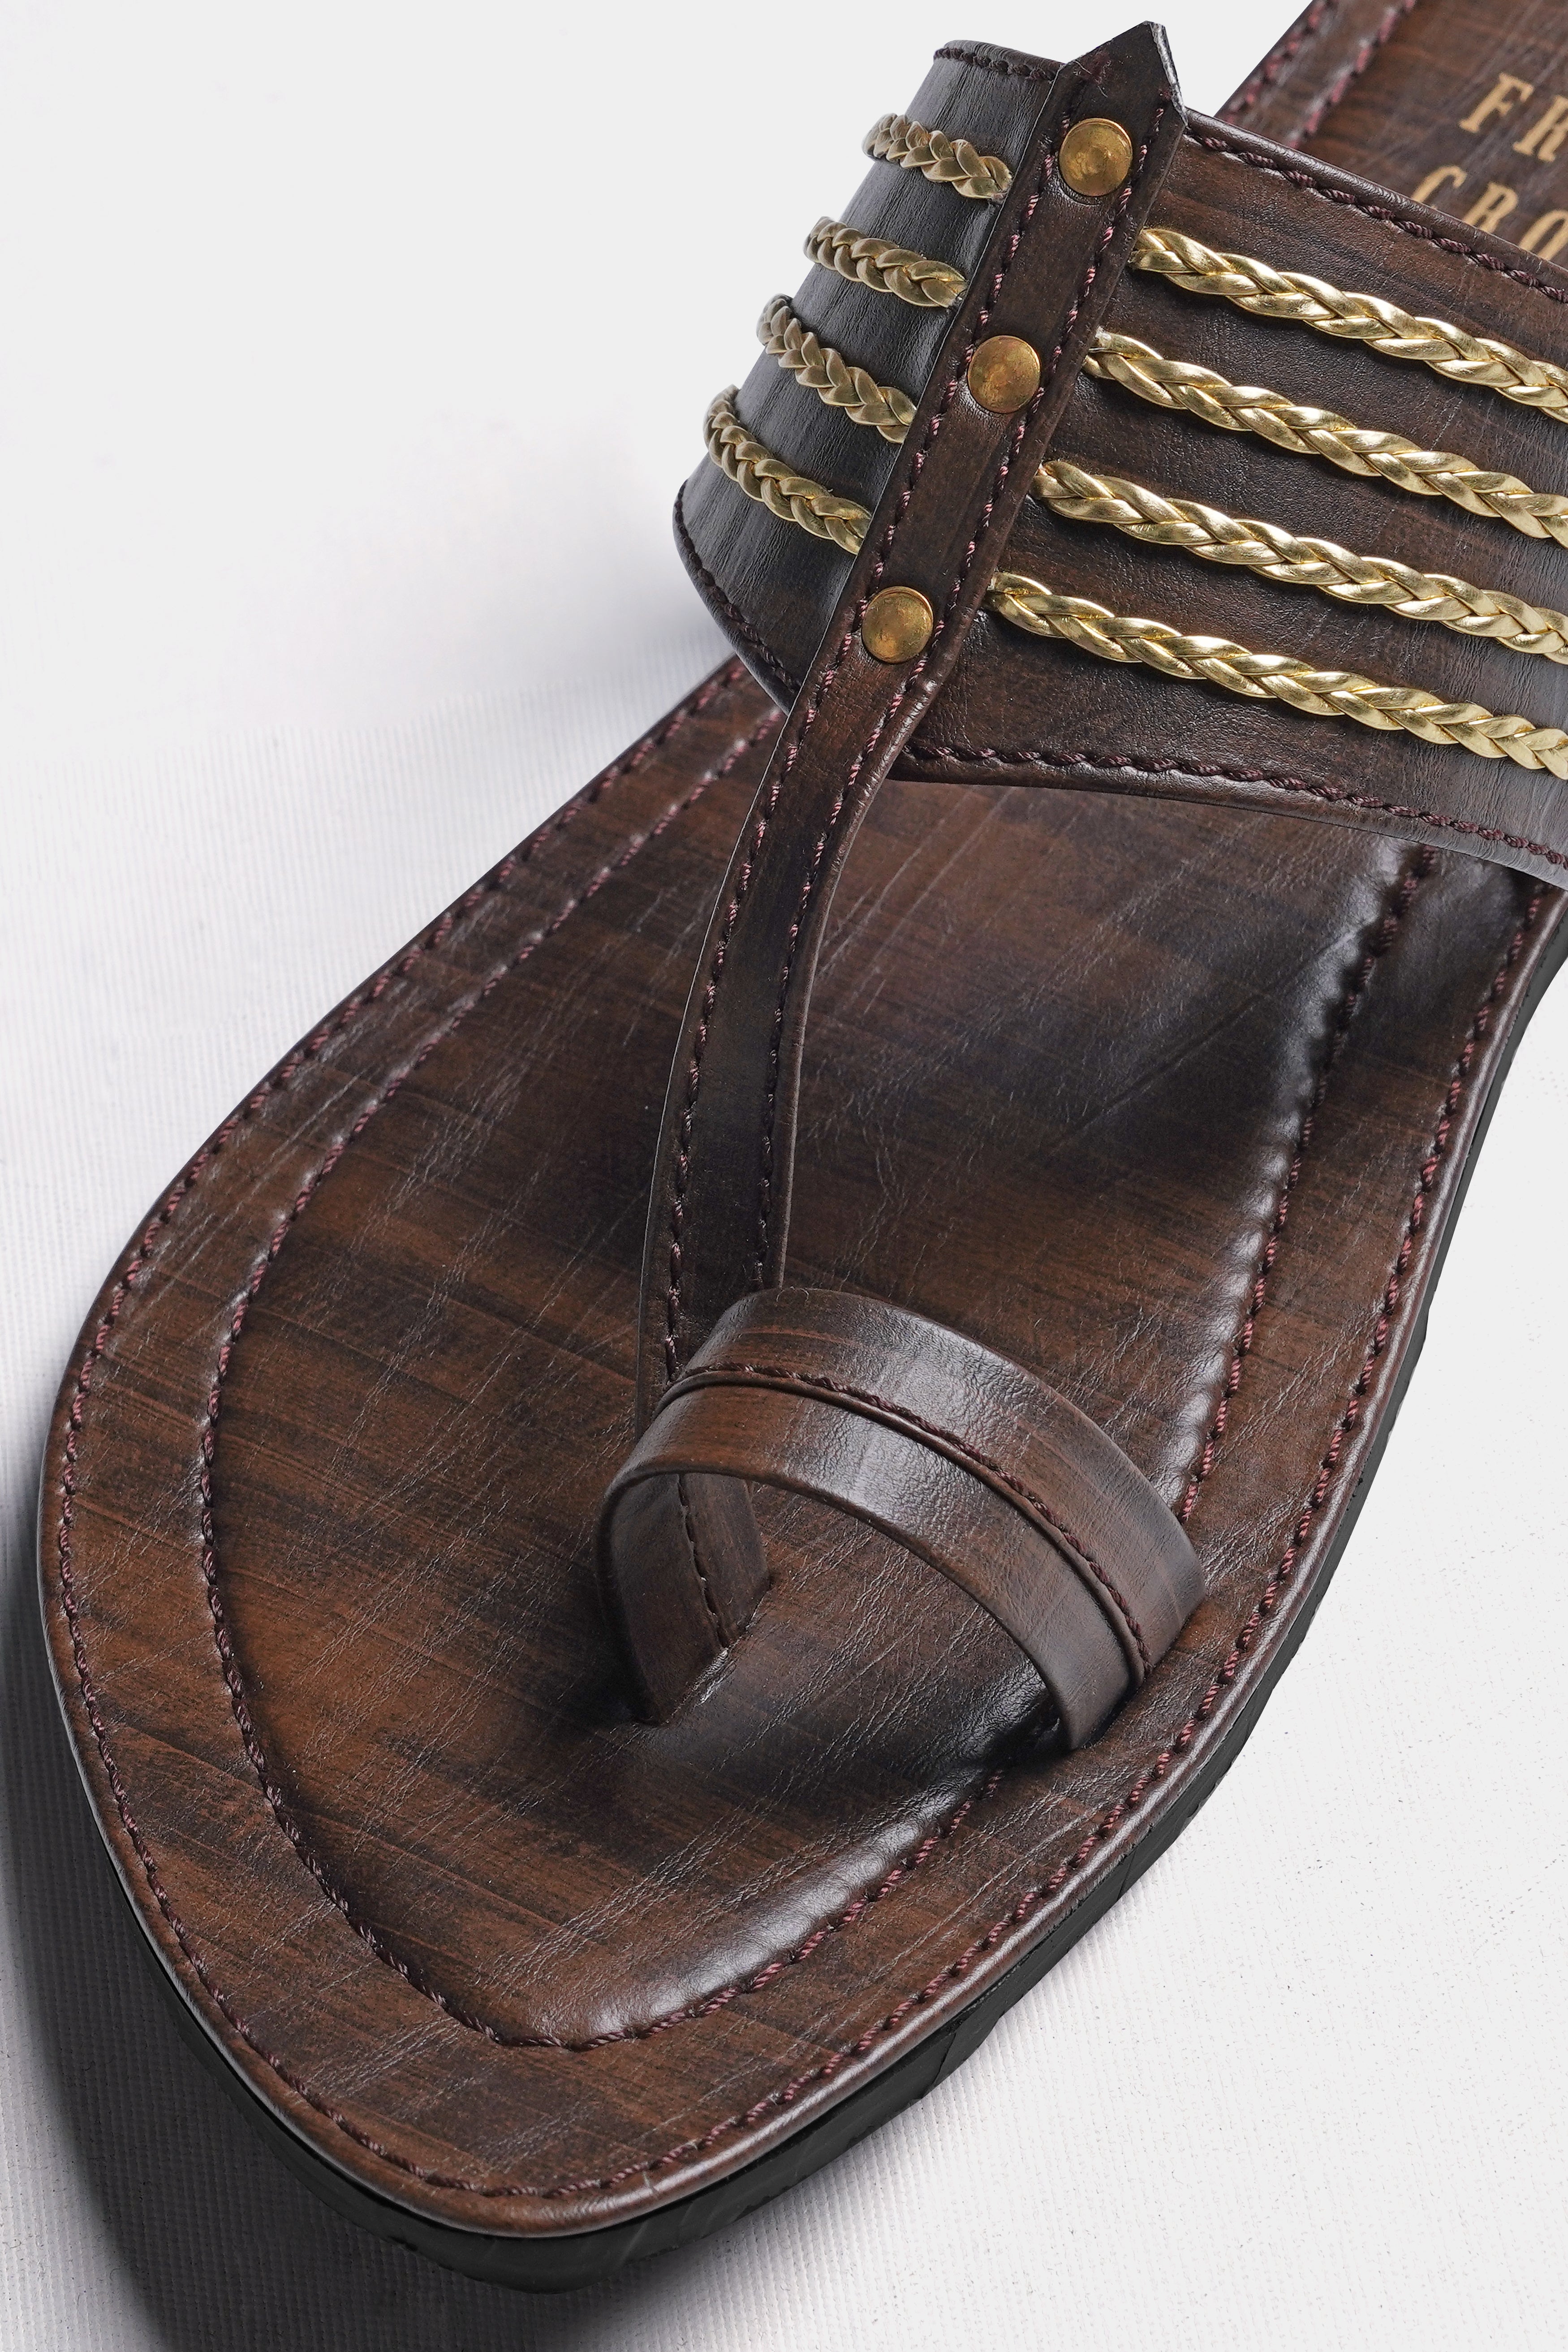 Wood Brown with Golden Stitched Vegan Leather Kolhapuri Sandal FT157-6, FT157-7, FT157-8, FT157-9, FT157-10, FT157-11